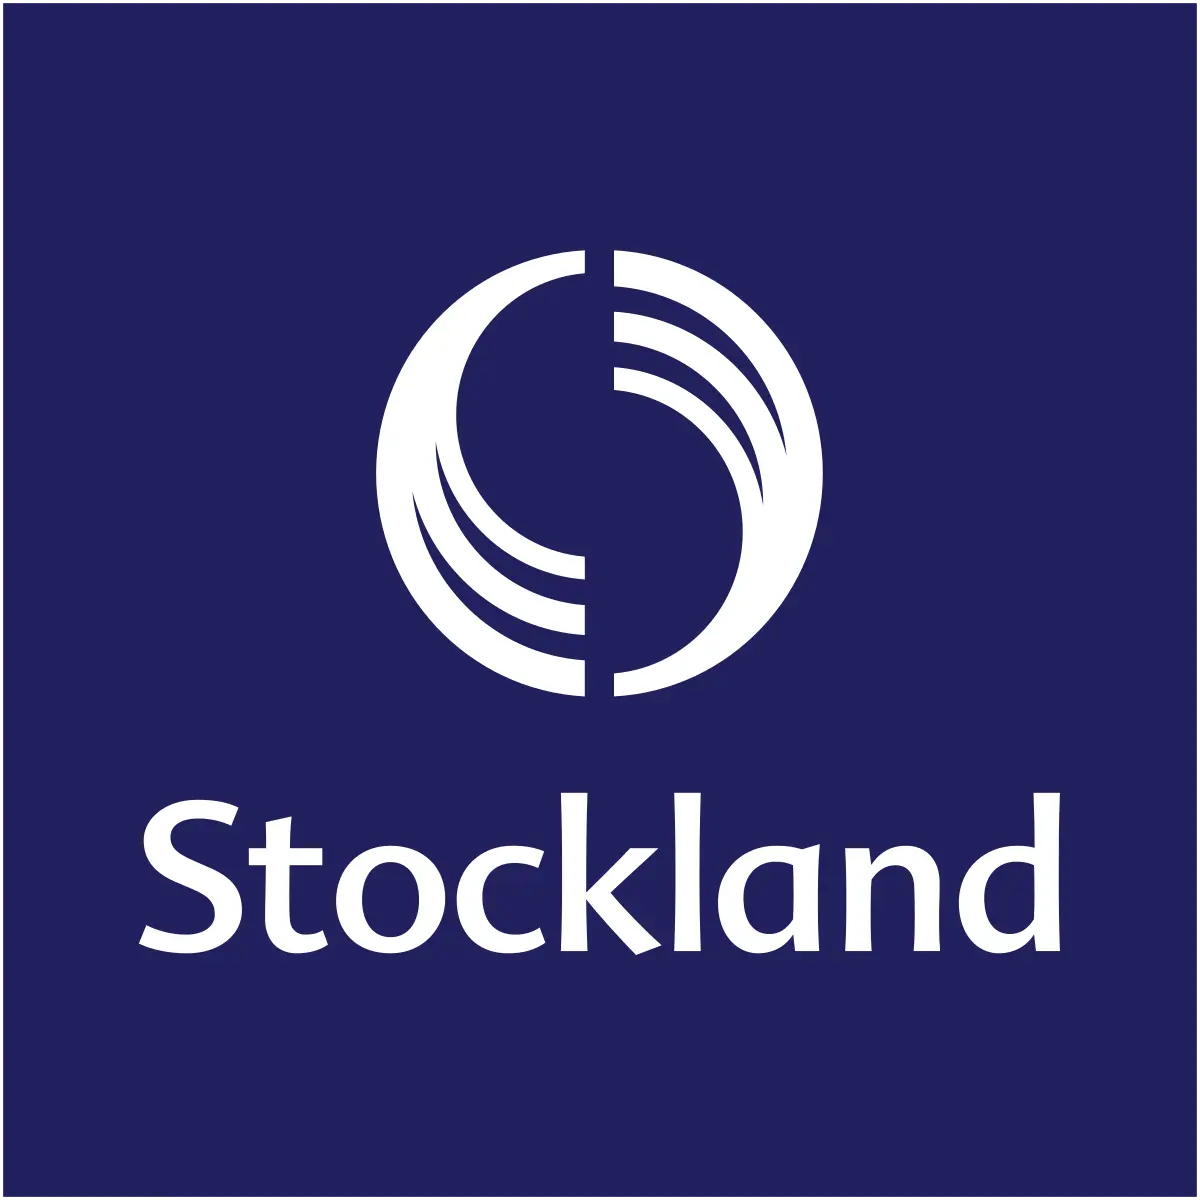 stockland-logo